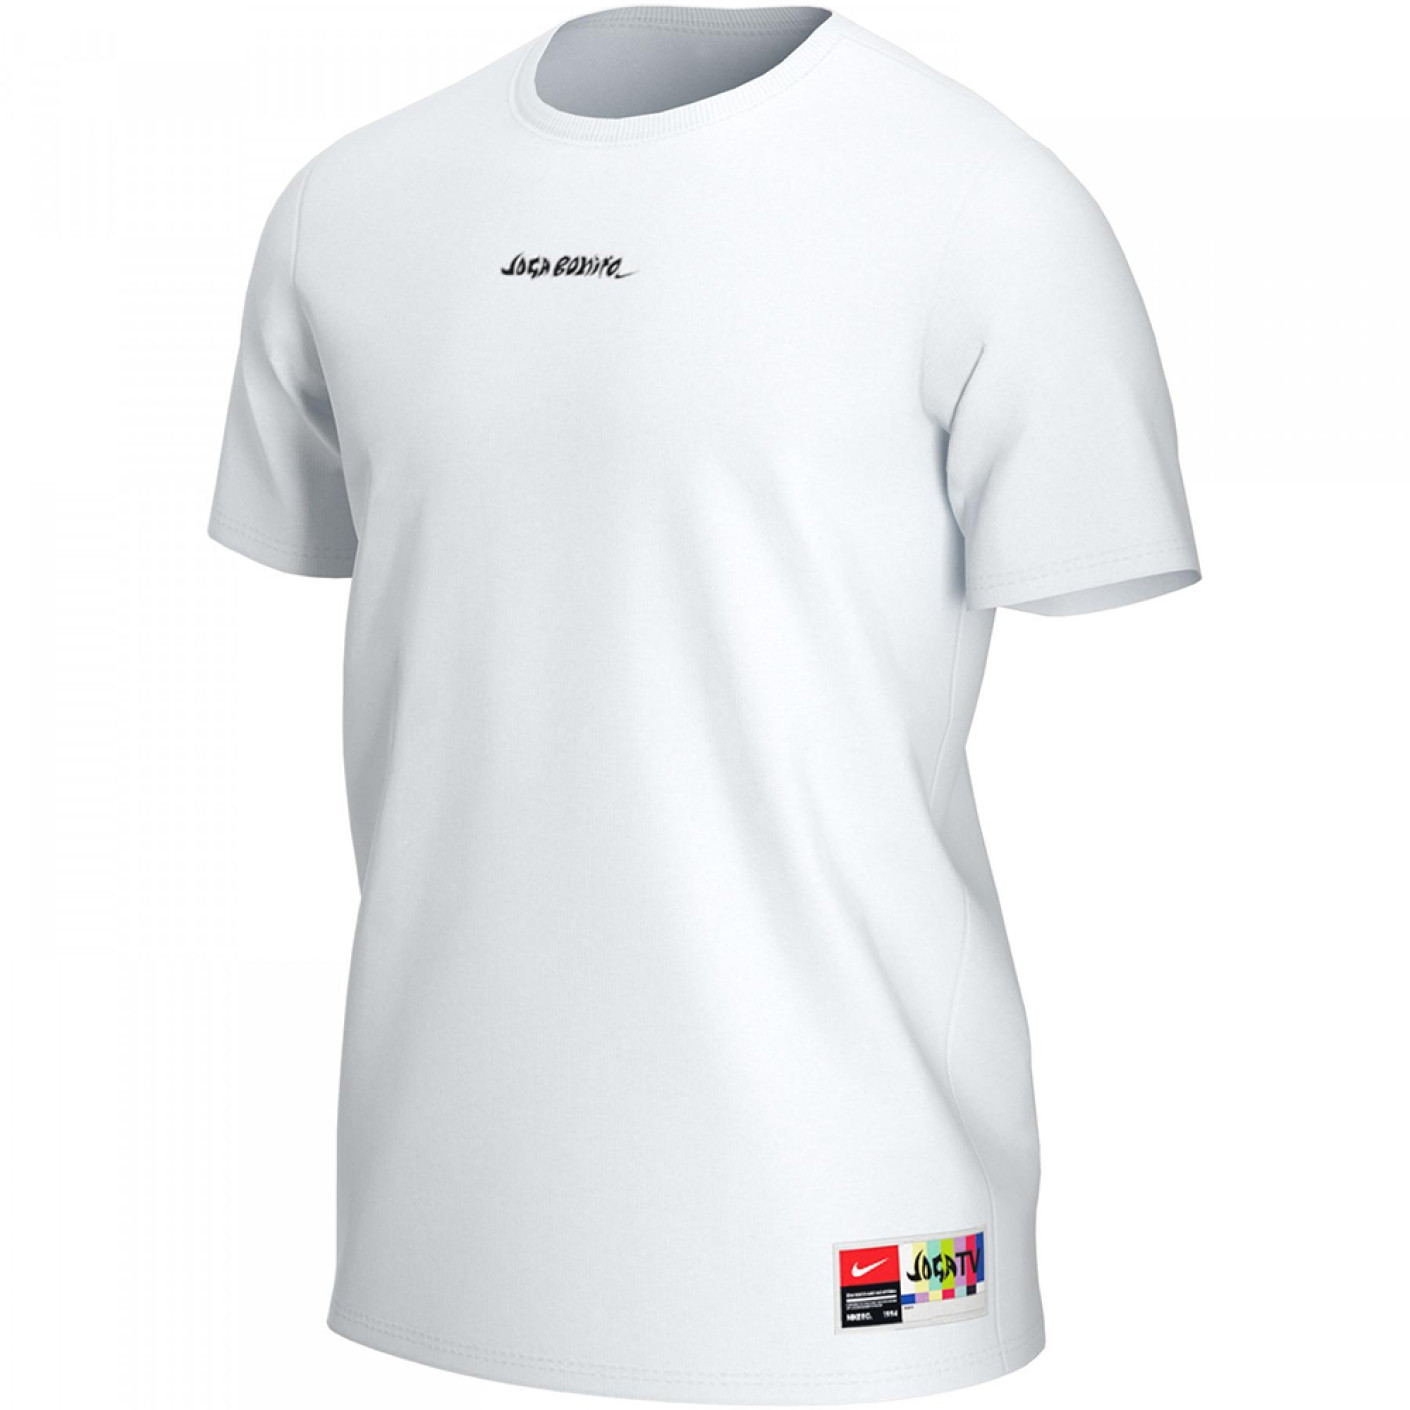 T-shirt Nike Football Joga Bonito Blanc